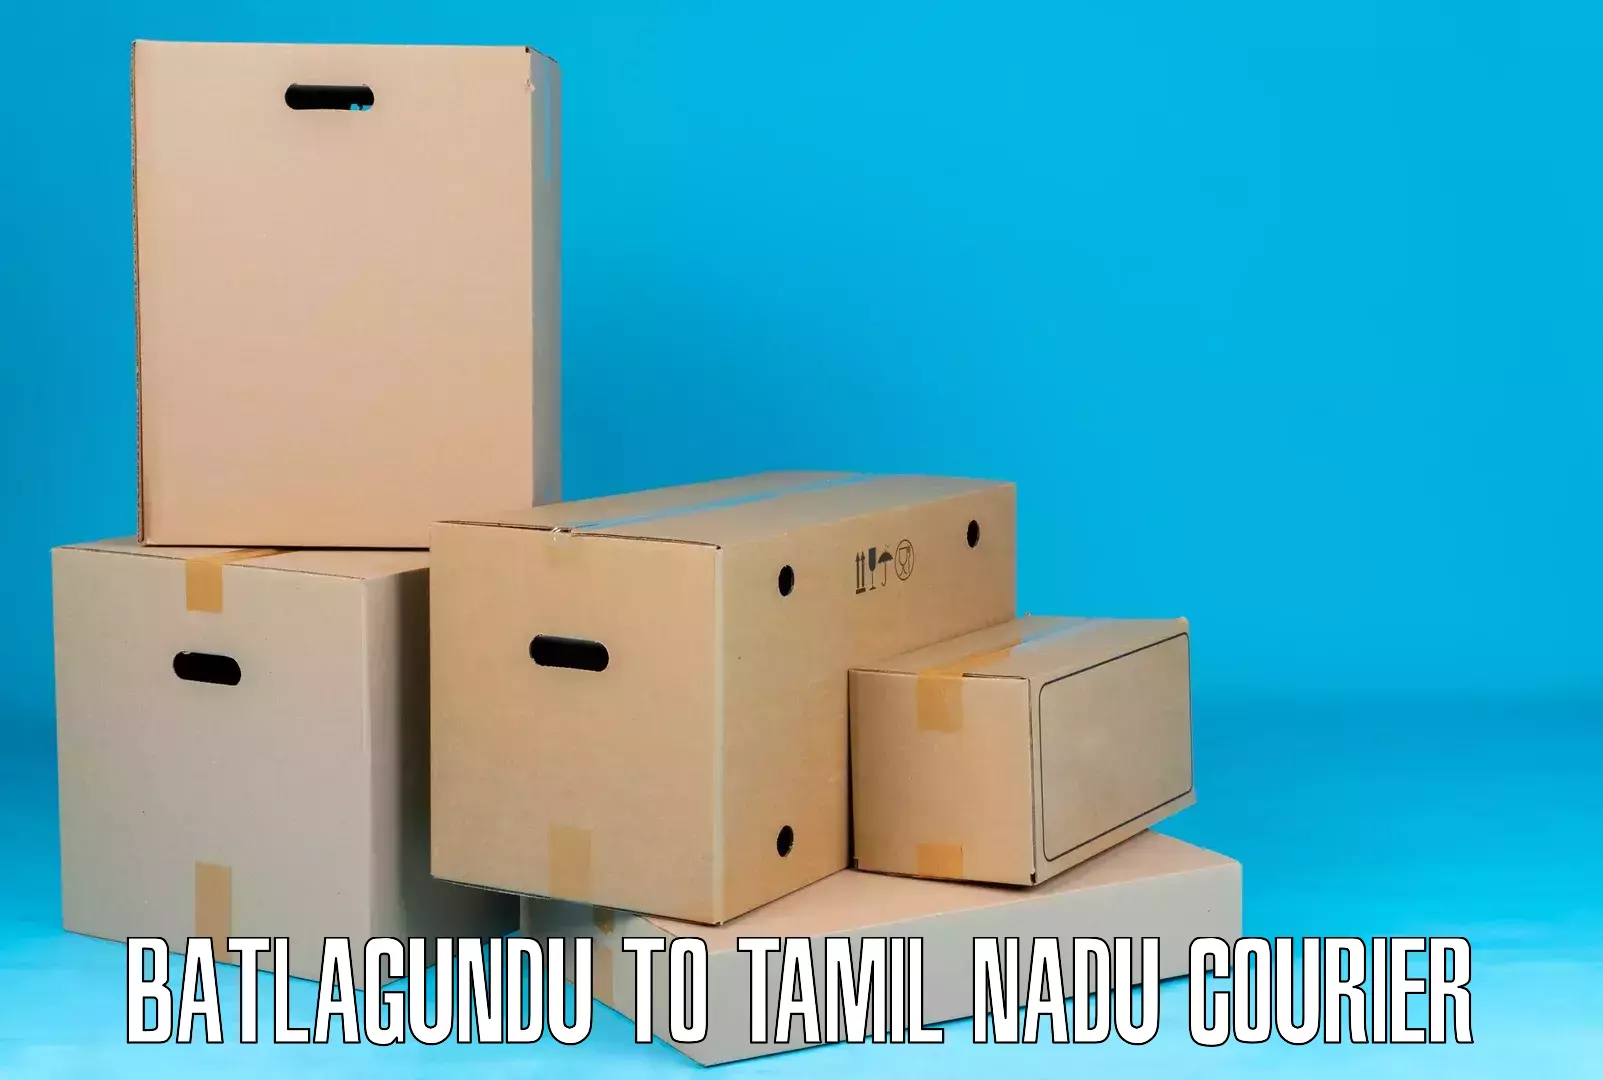 Online shipping calculator Batlagundu to Tamil Nadu